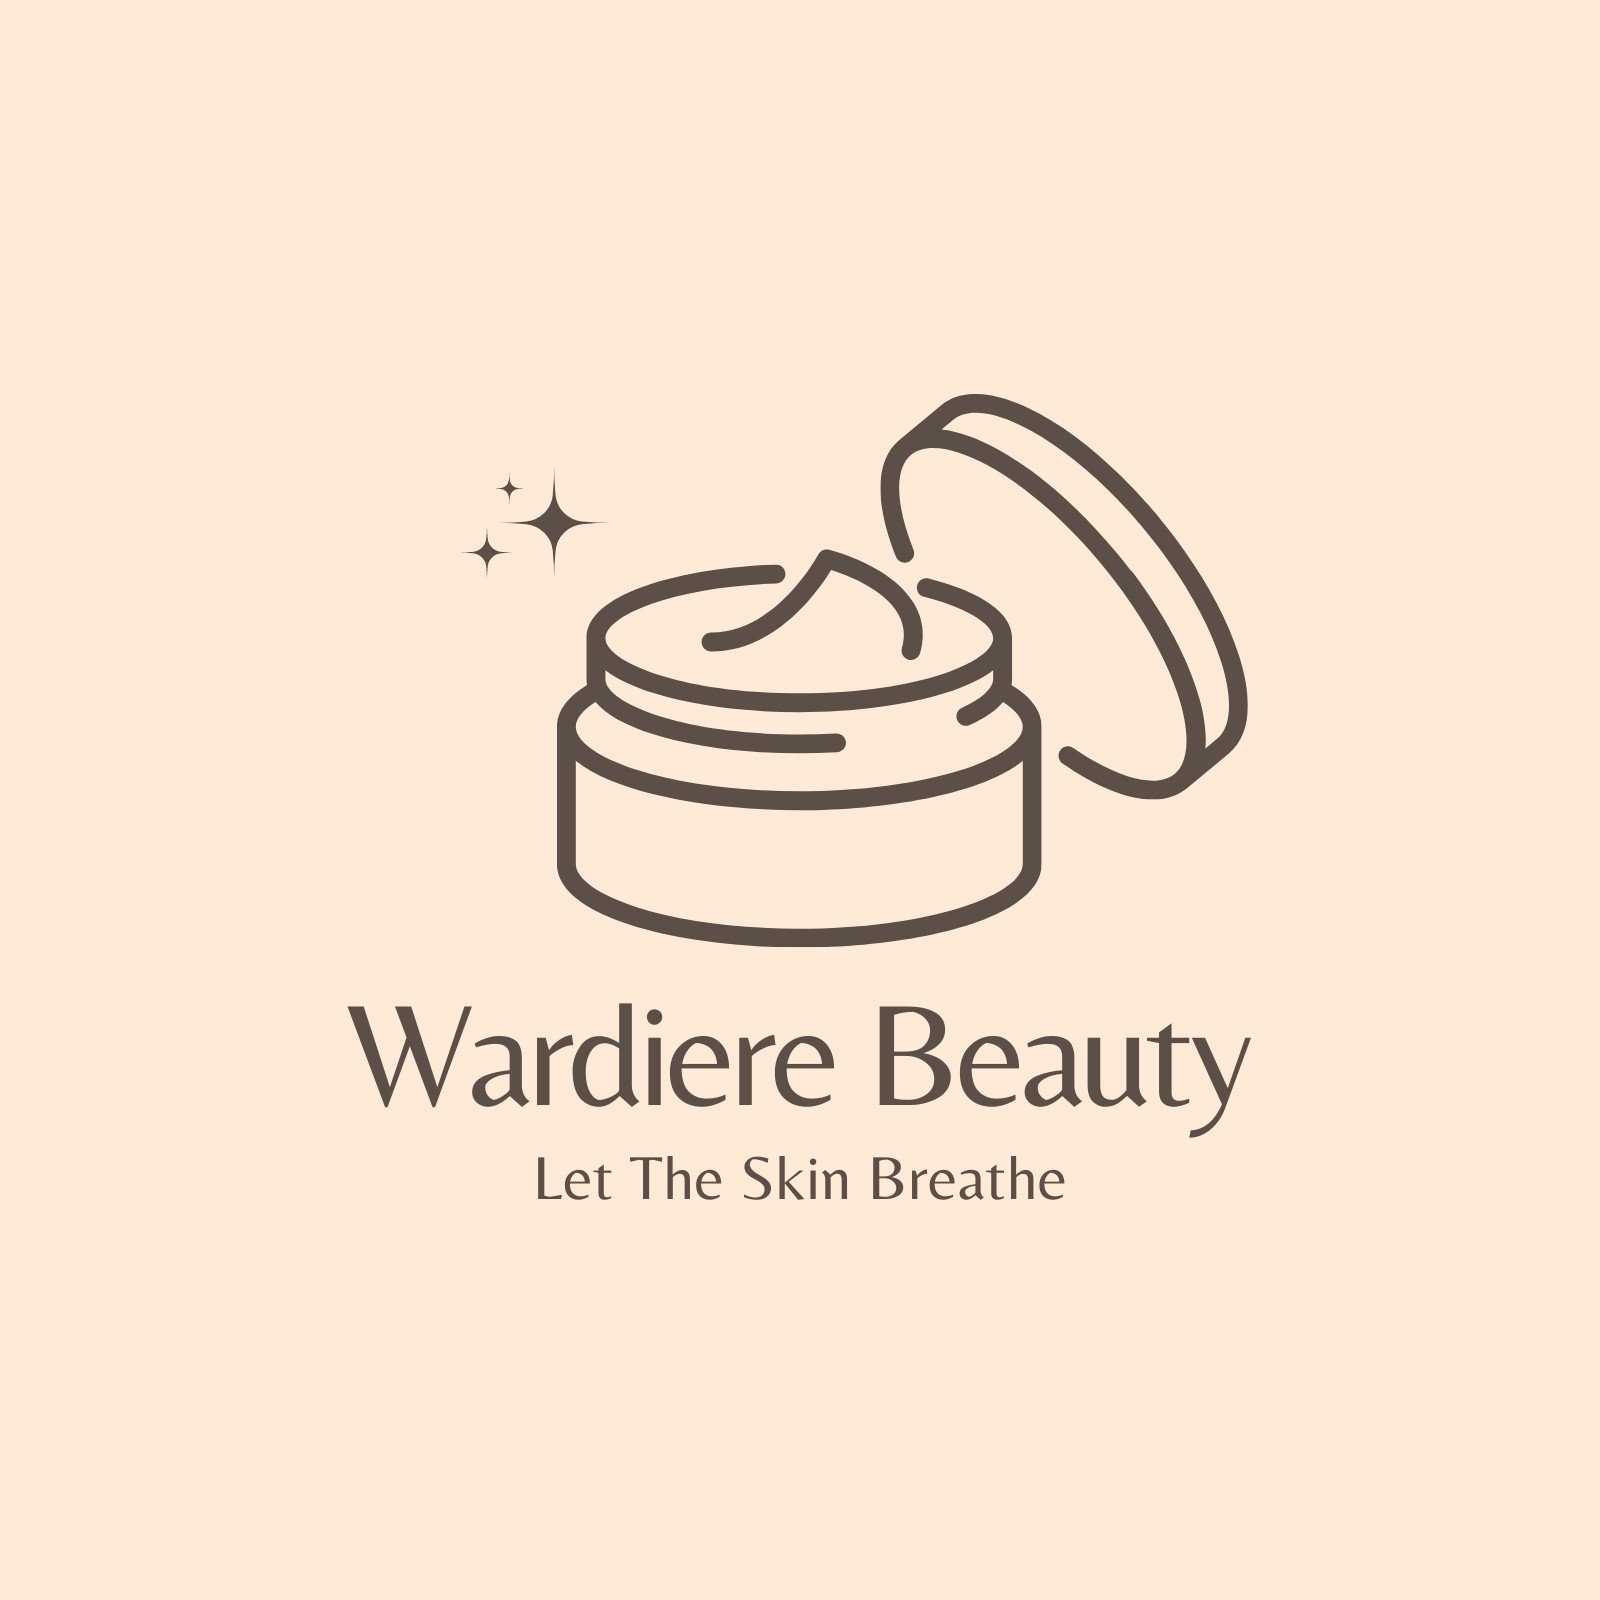 beauty brands logo